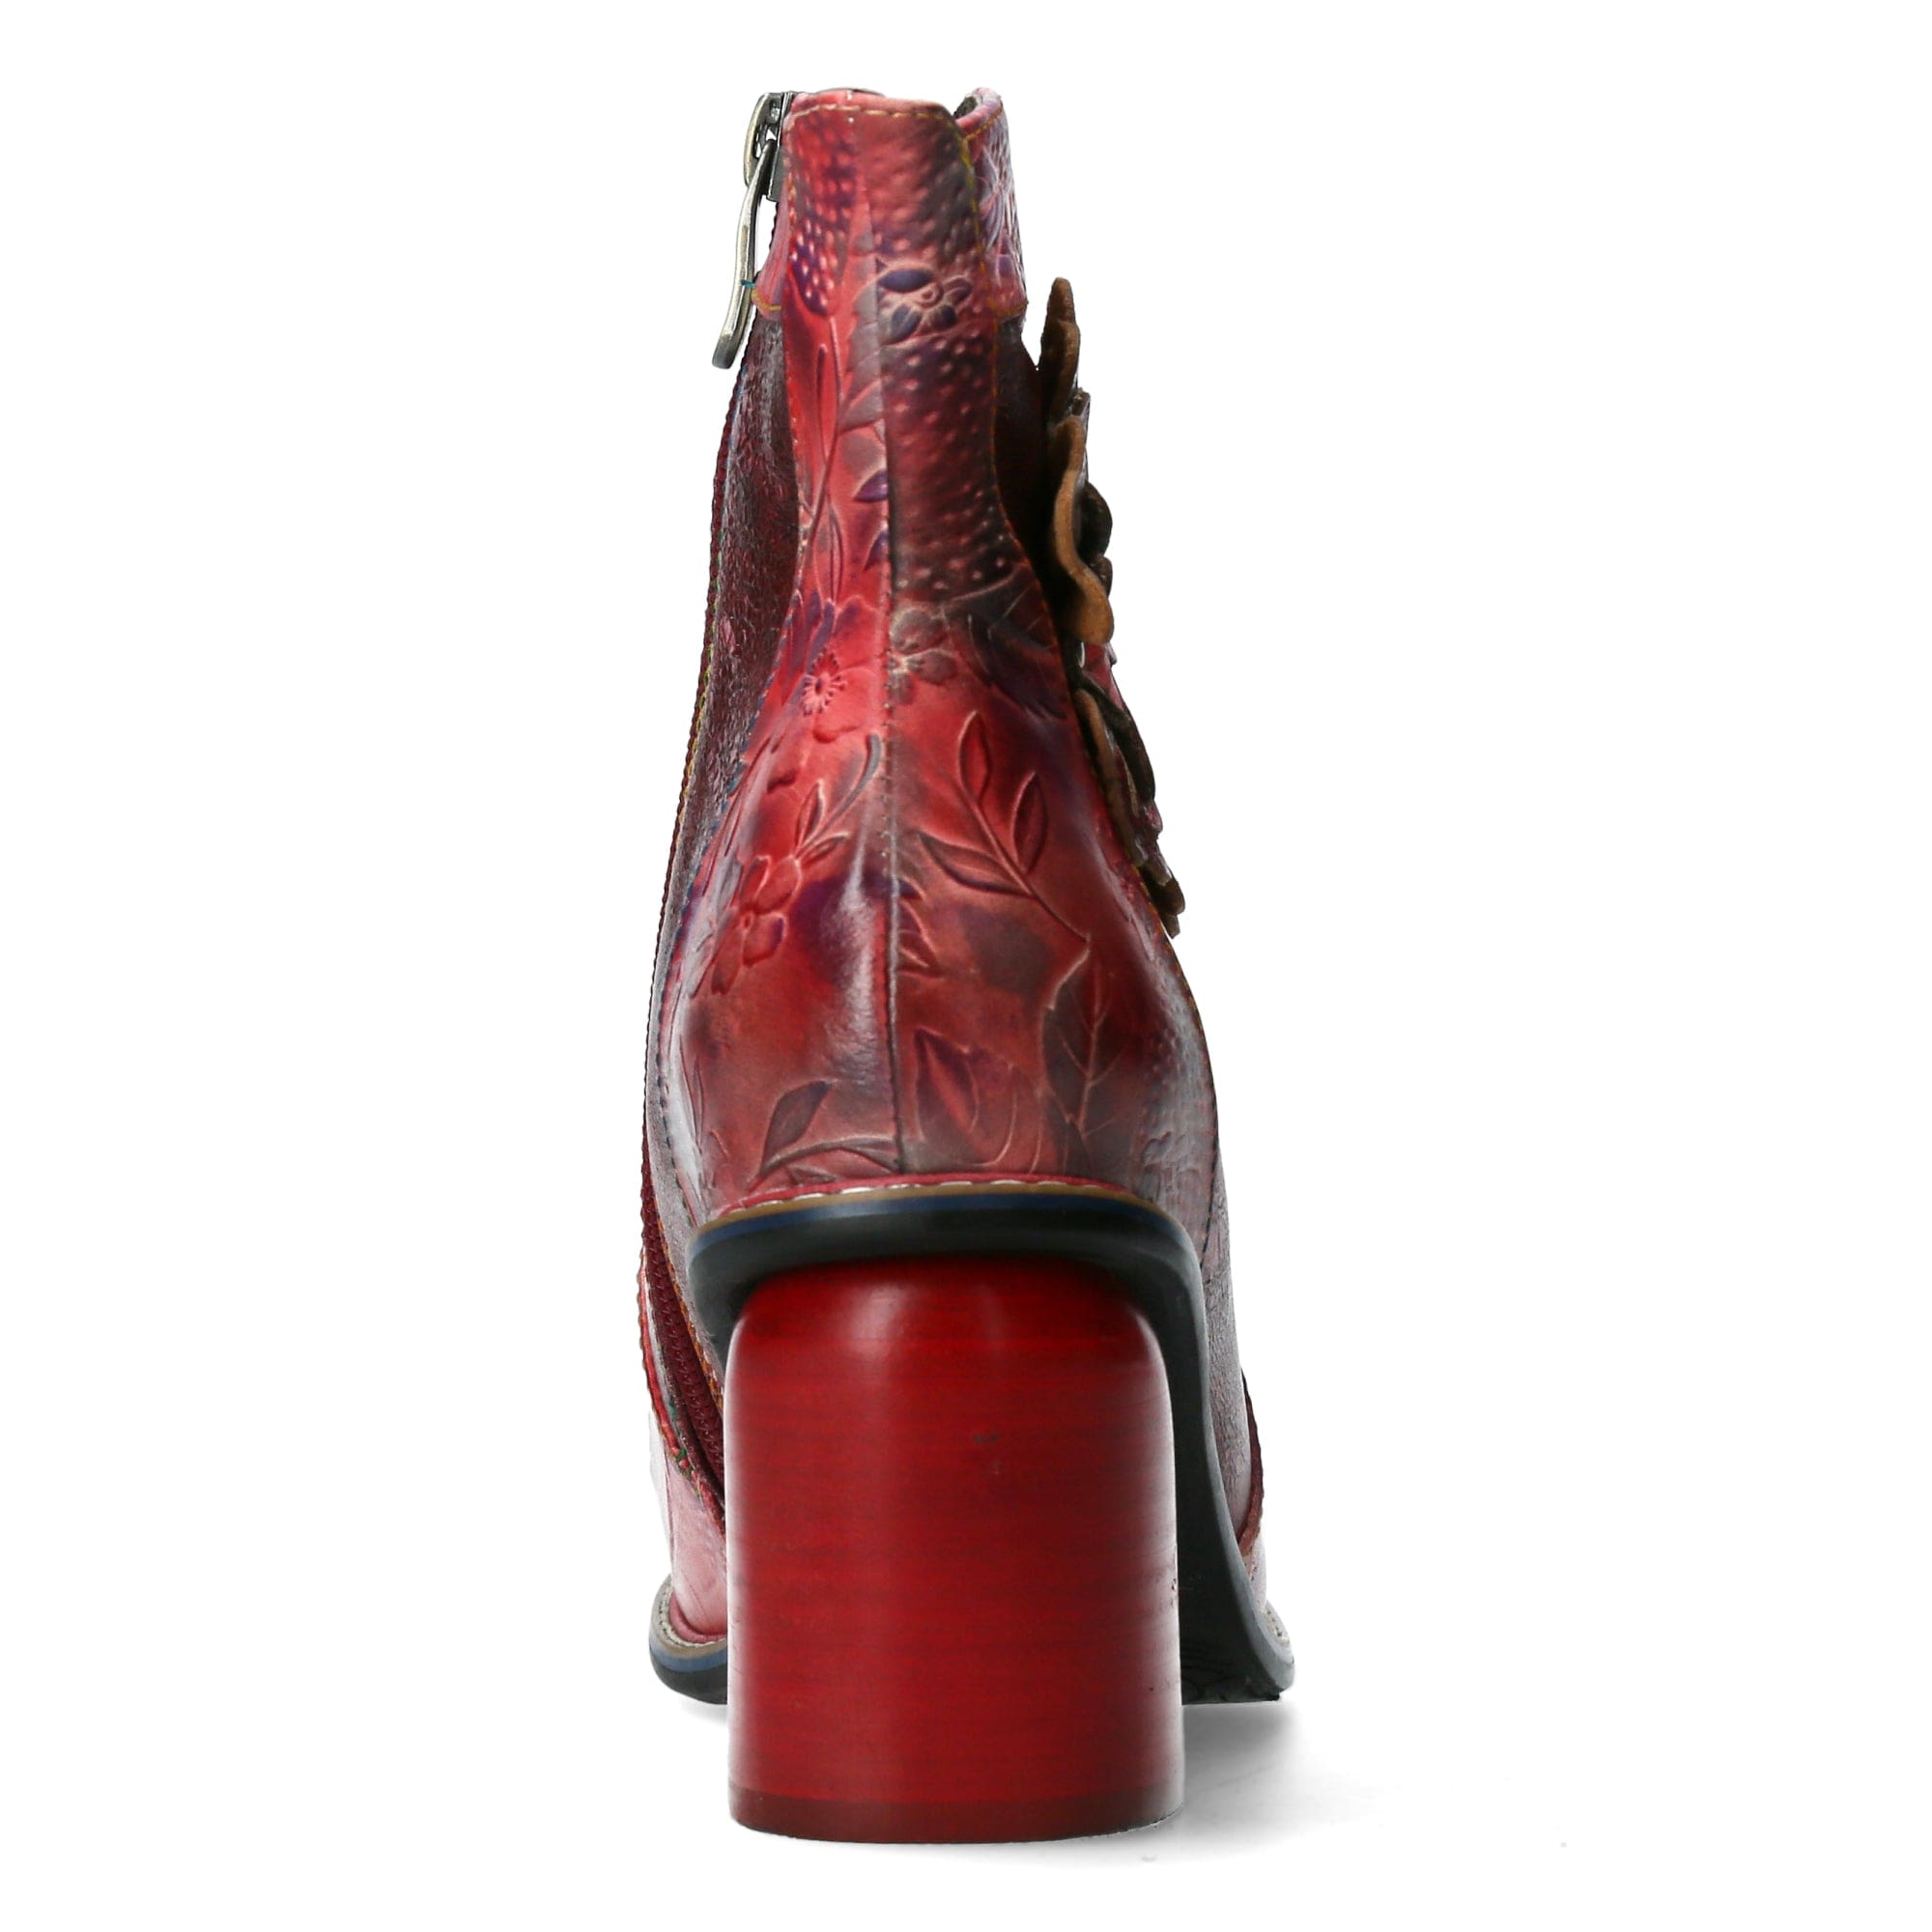 Chaussure IDCENEO 03 - Boots